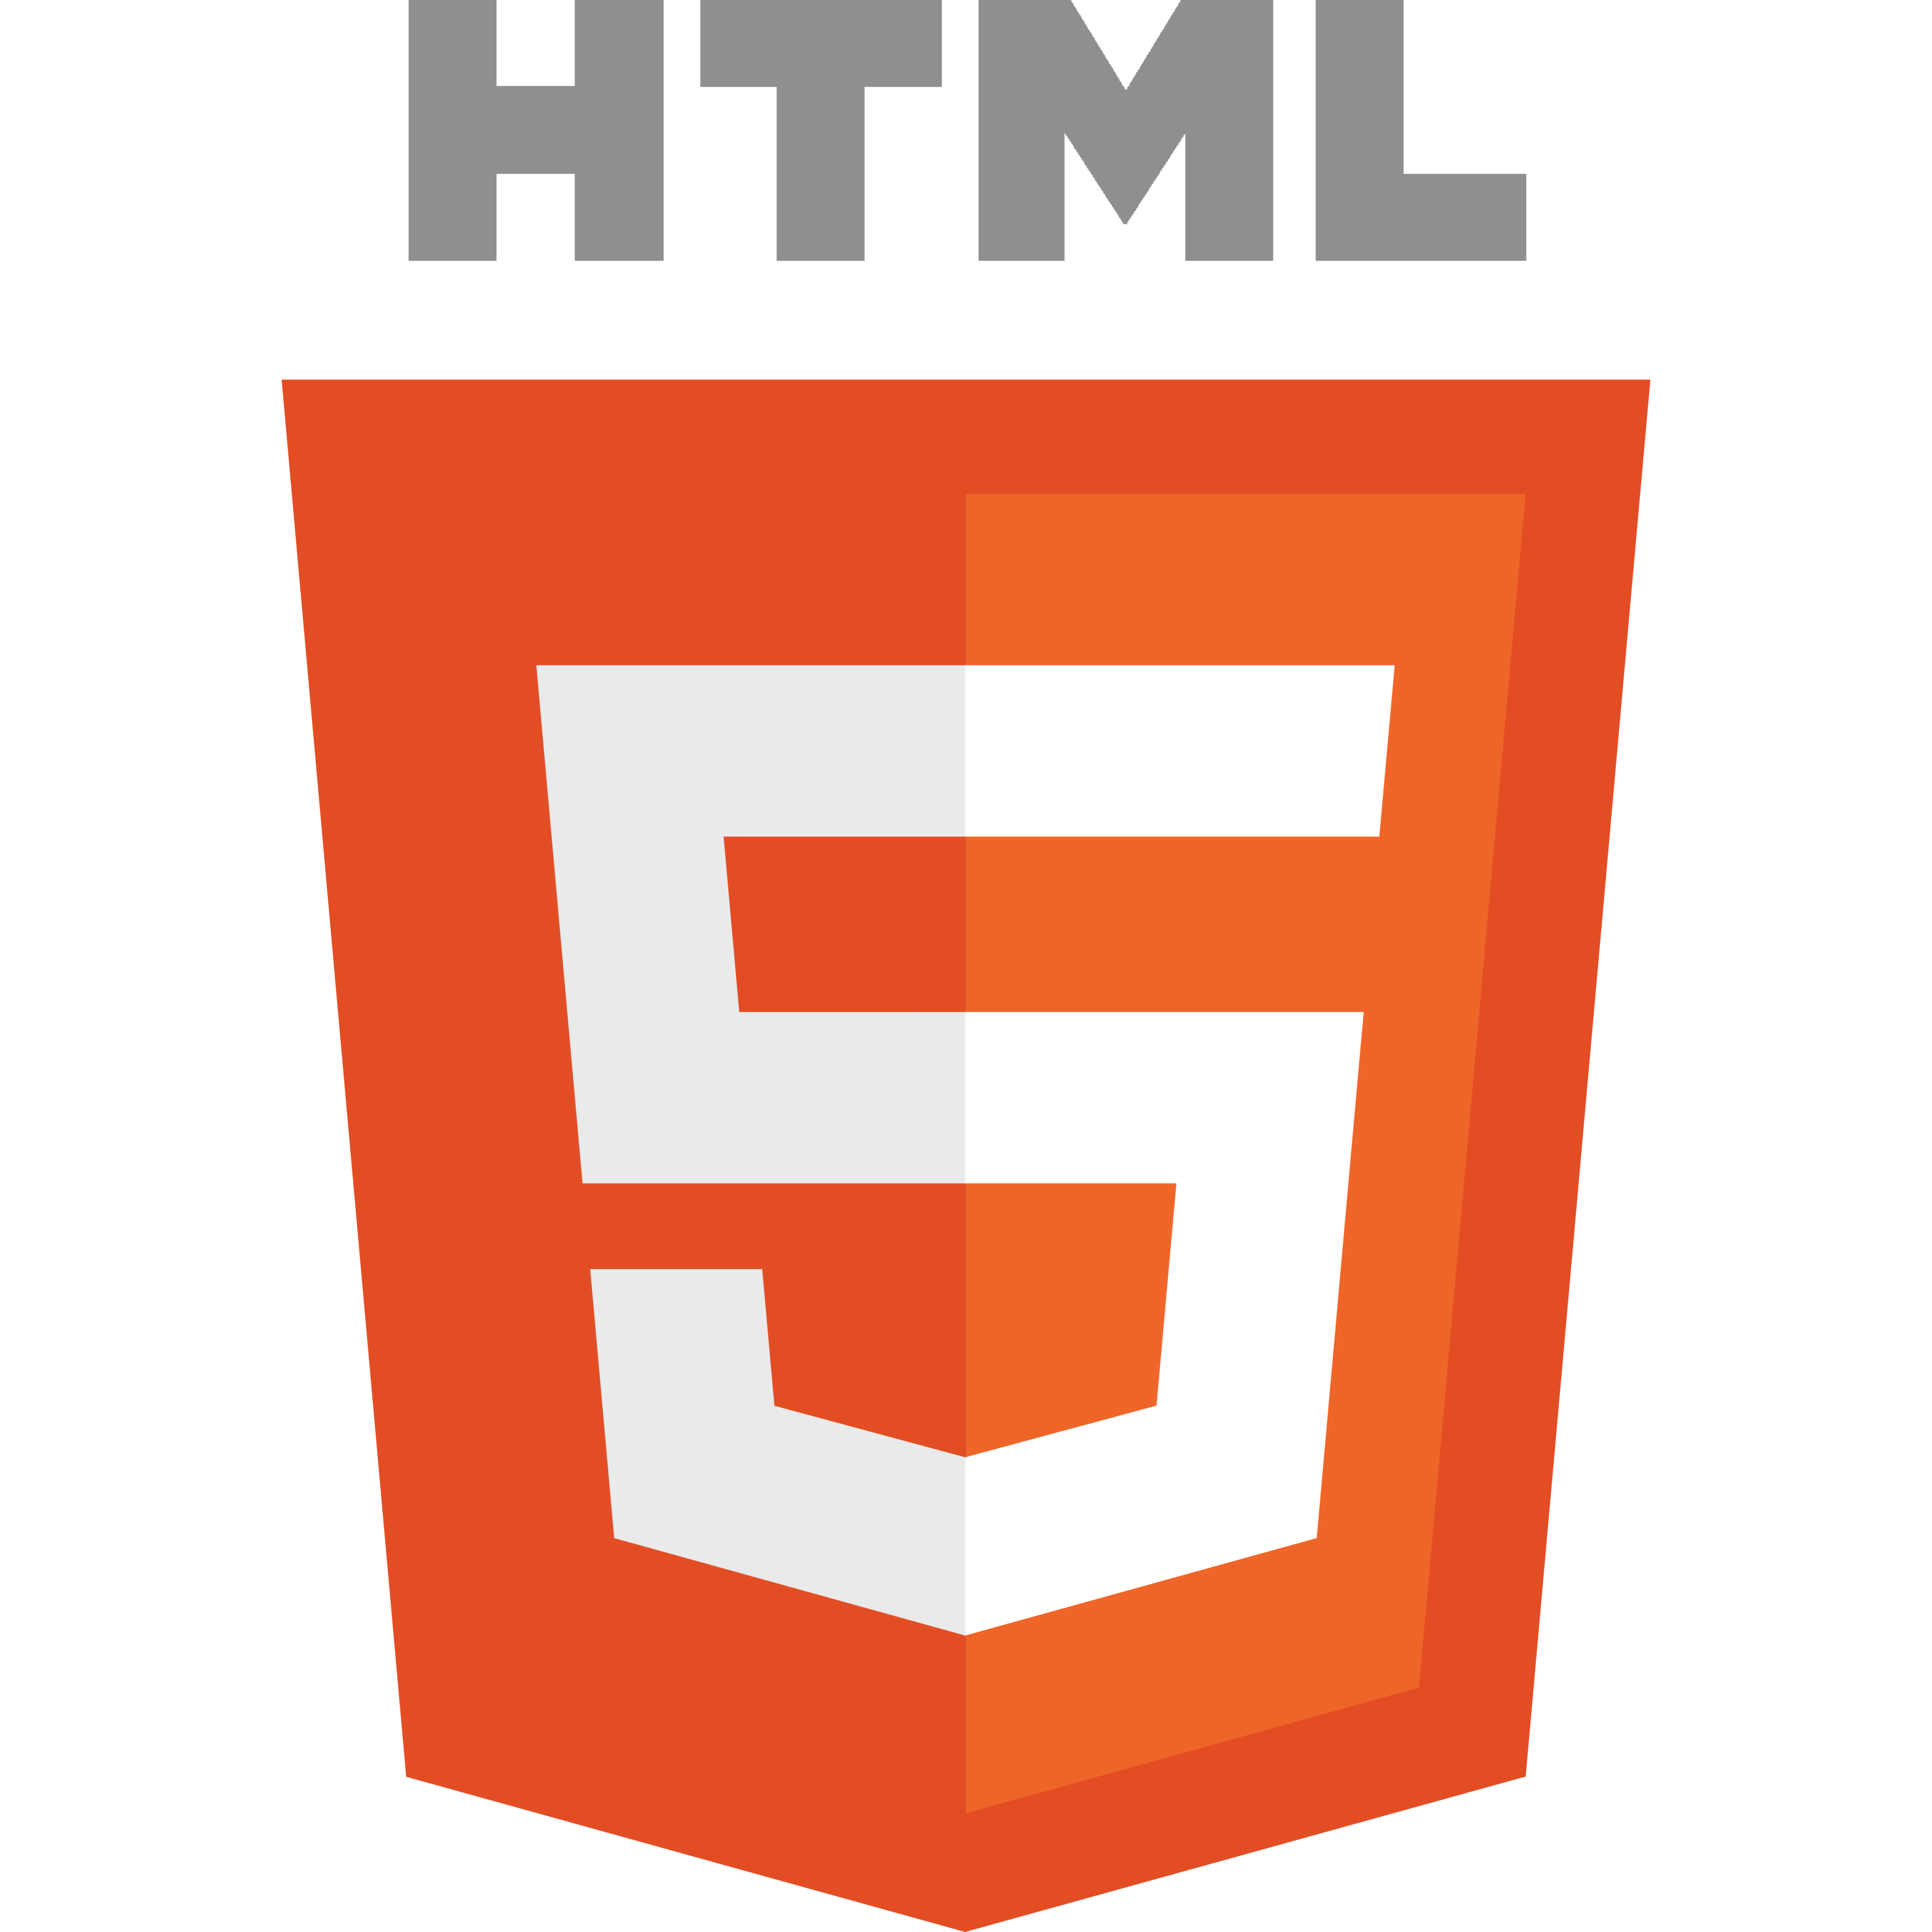 HTML5 Spiele